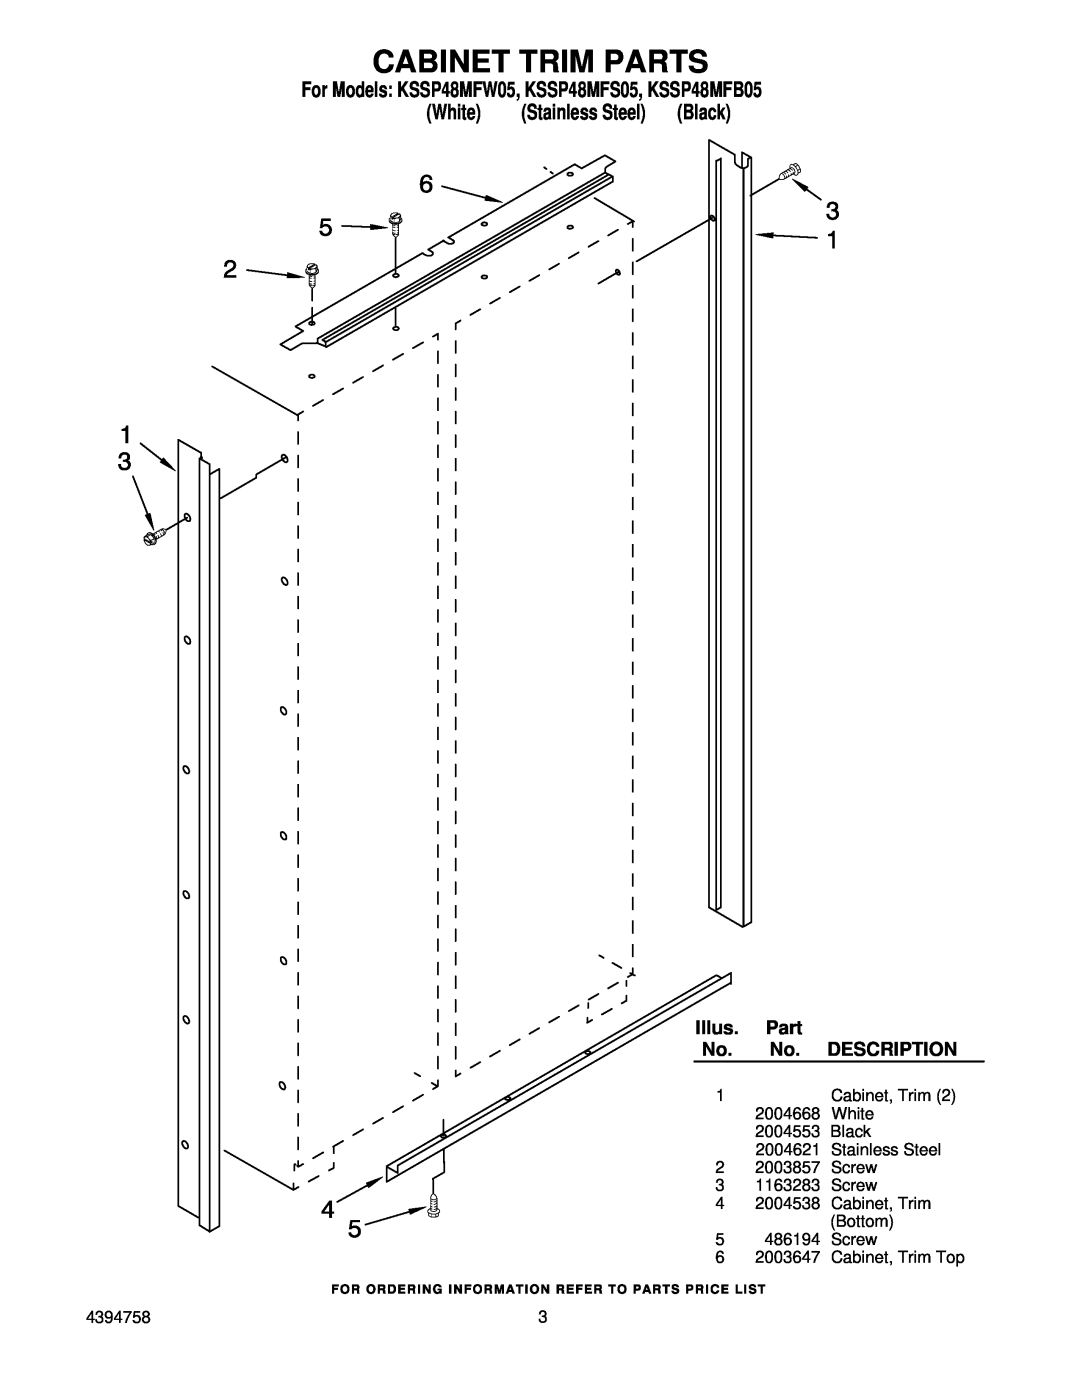 KitchenAid manual Cabinet Trim Parts, Description, For Models KSSP48MFW05, KSSP48MFS05, KSSP48MFB05, Illus 